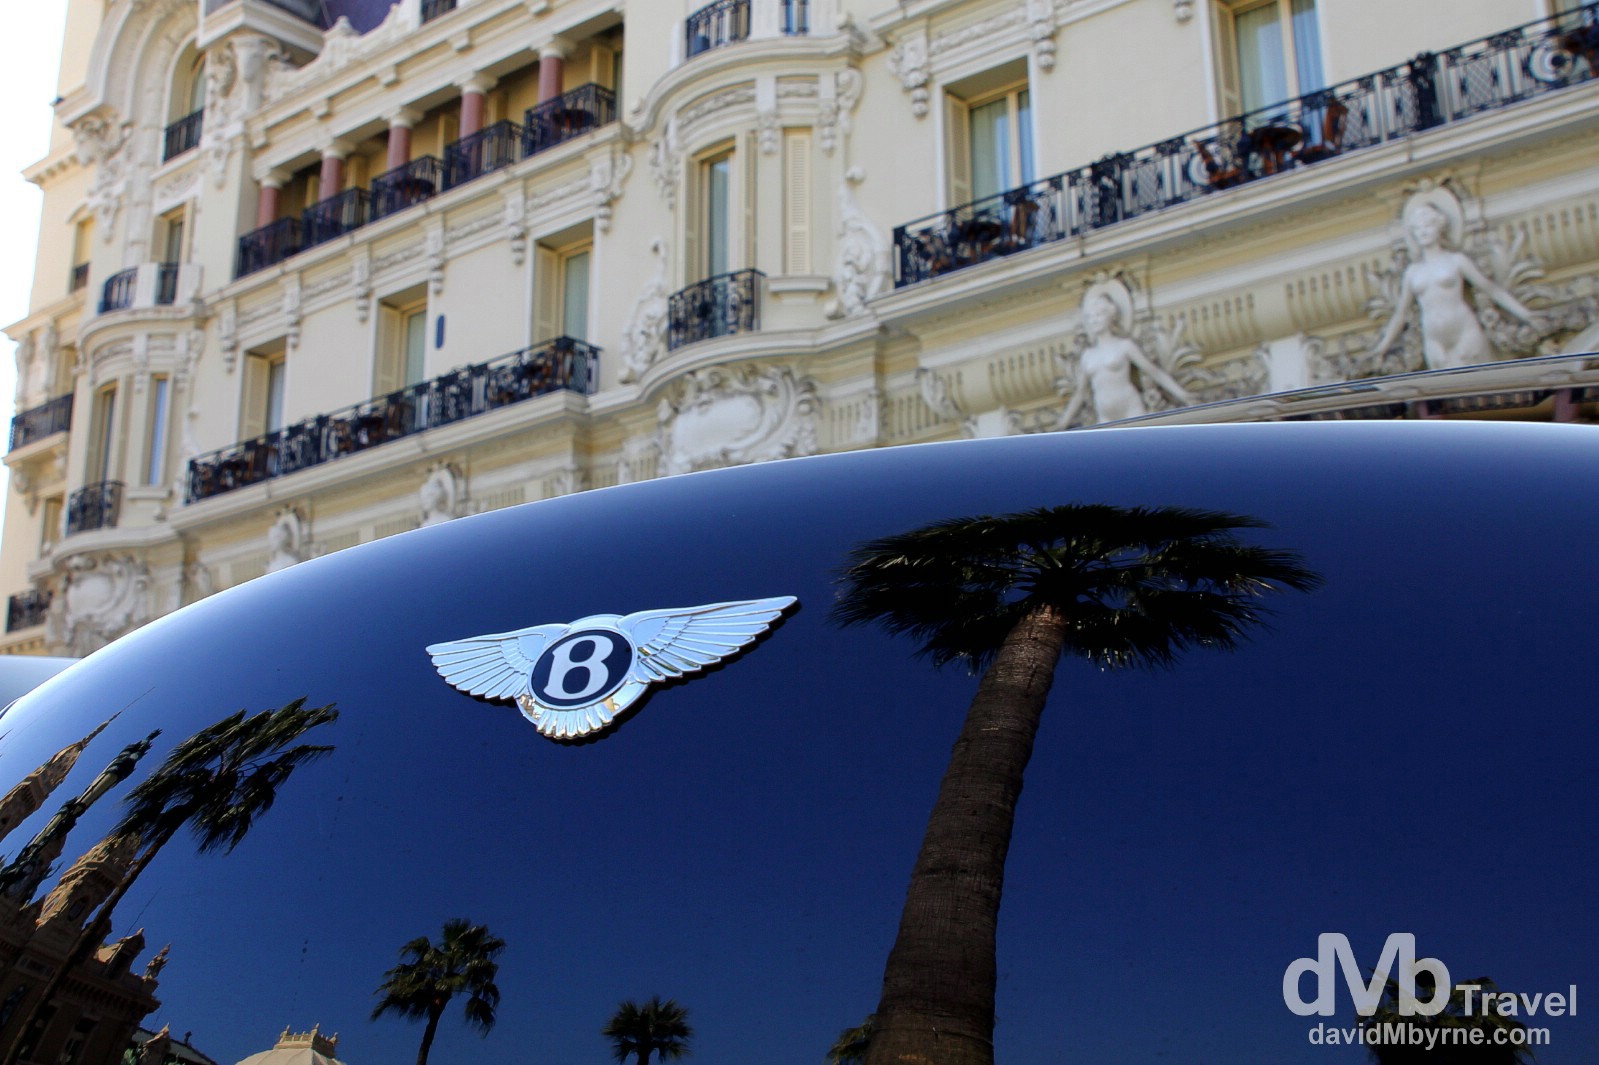 A Bentley parked outside the Hotel de Paris in Monte-Carlo, Monaco, March 14th, 2014.